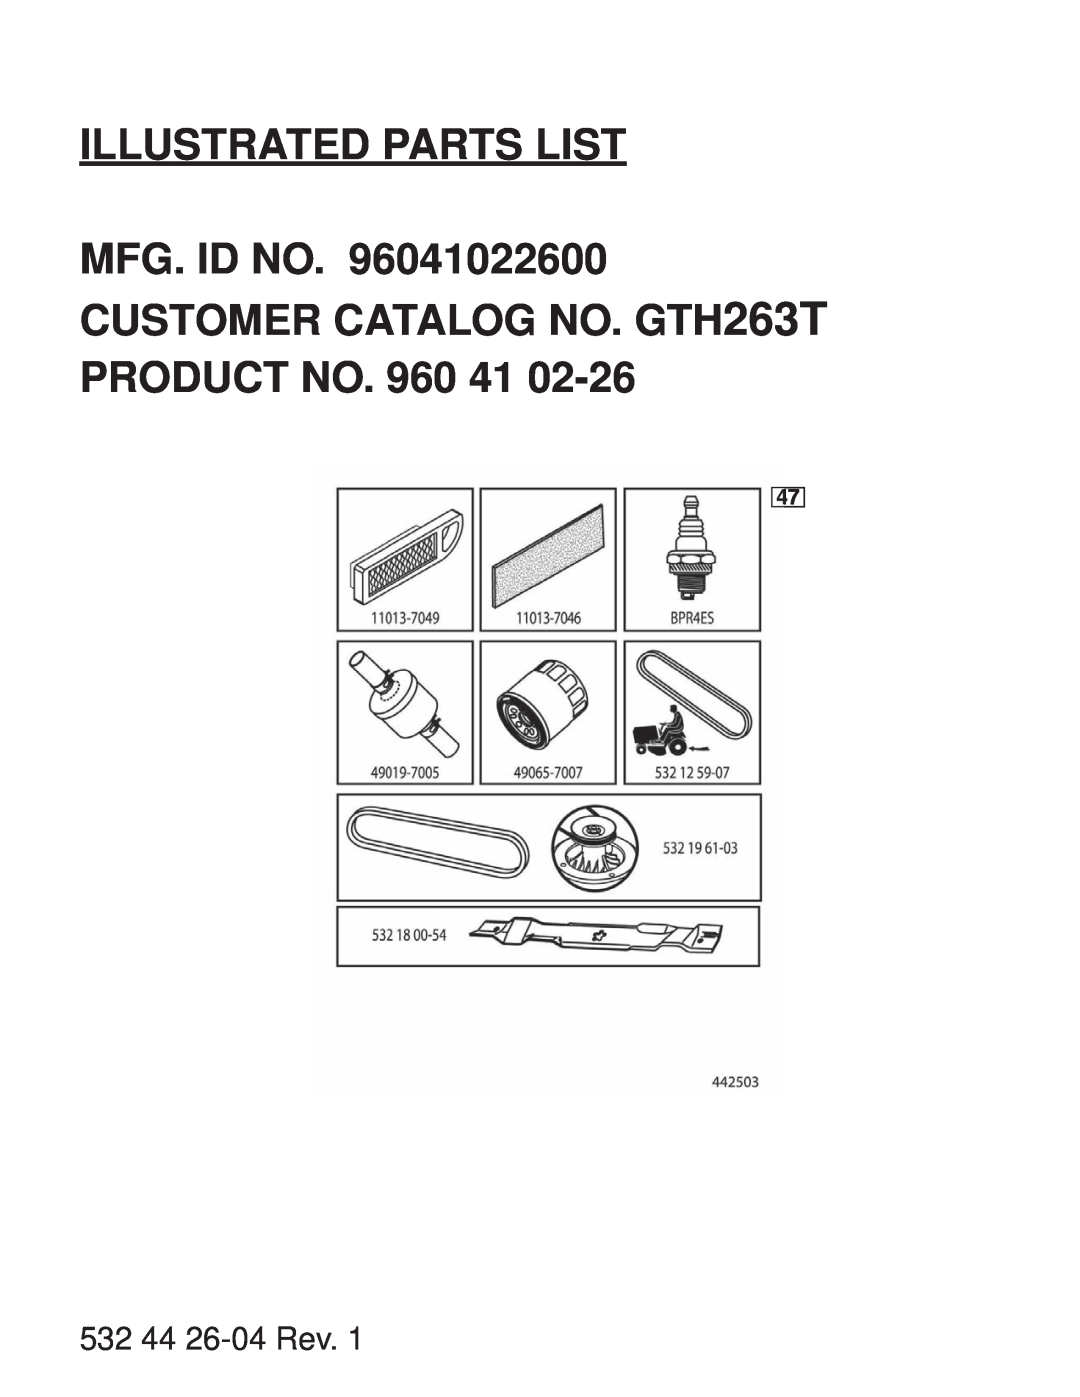 Husqvarna GTH263 T manual Illustrated Parts List Mfg. Id No, CUSTOMER CATALOG NO. GTH263T PRODUCT NO. 960, 532 44 26-04 Rev 